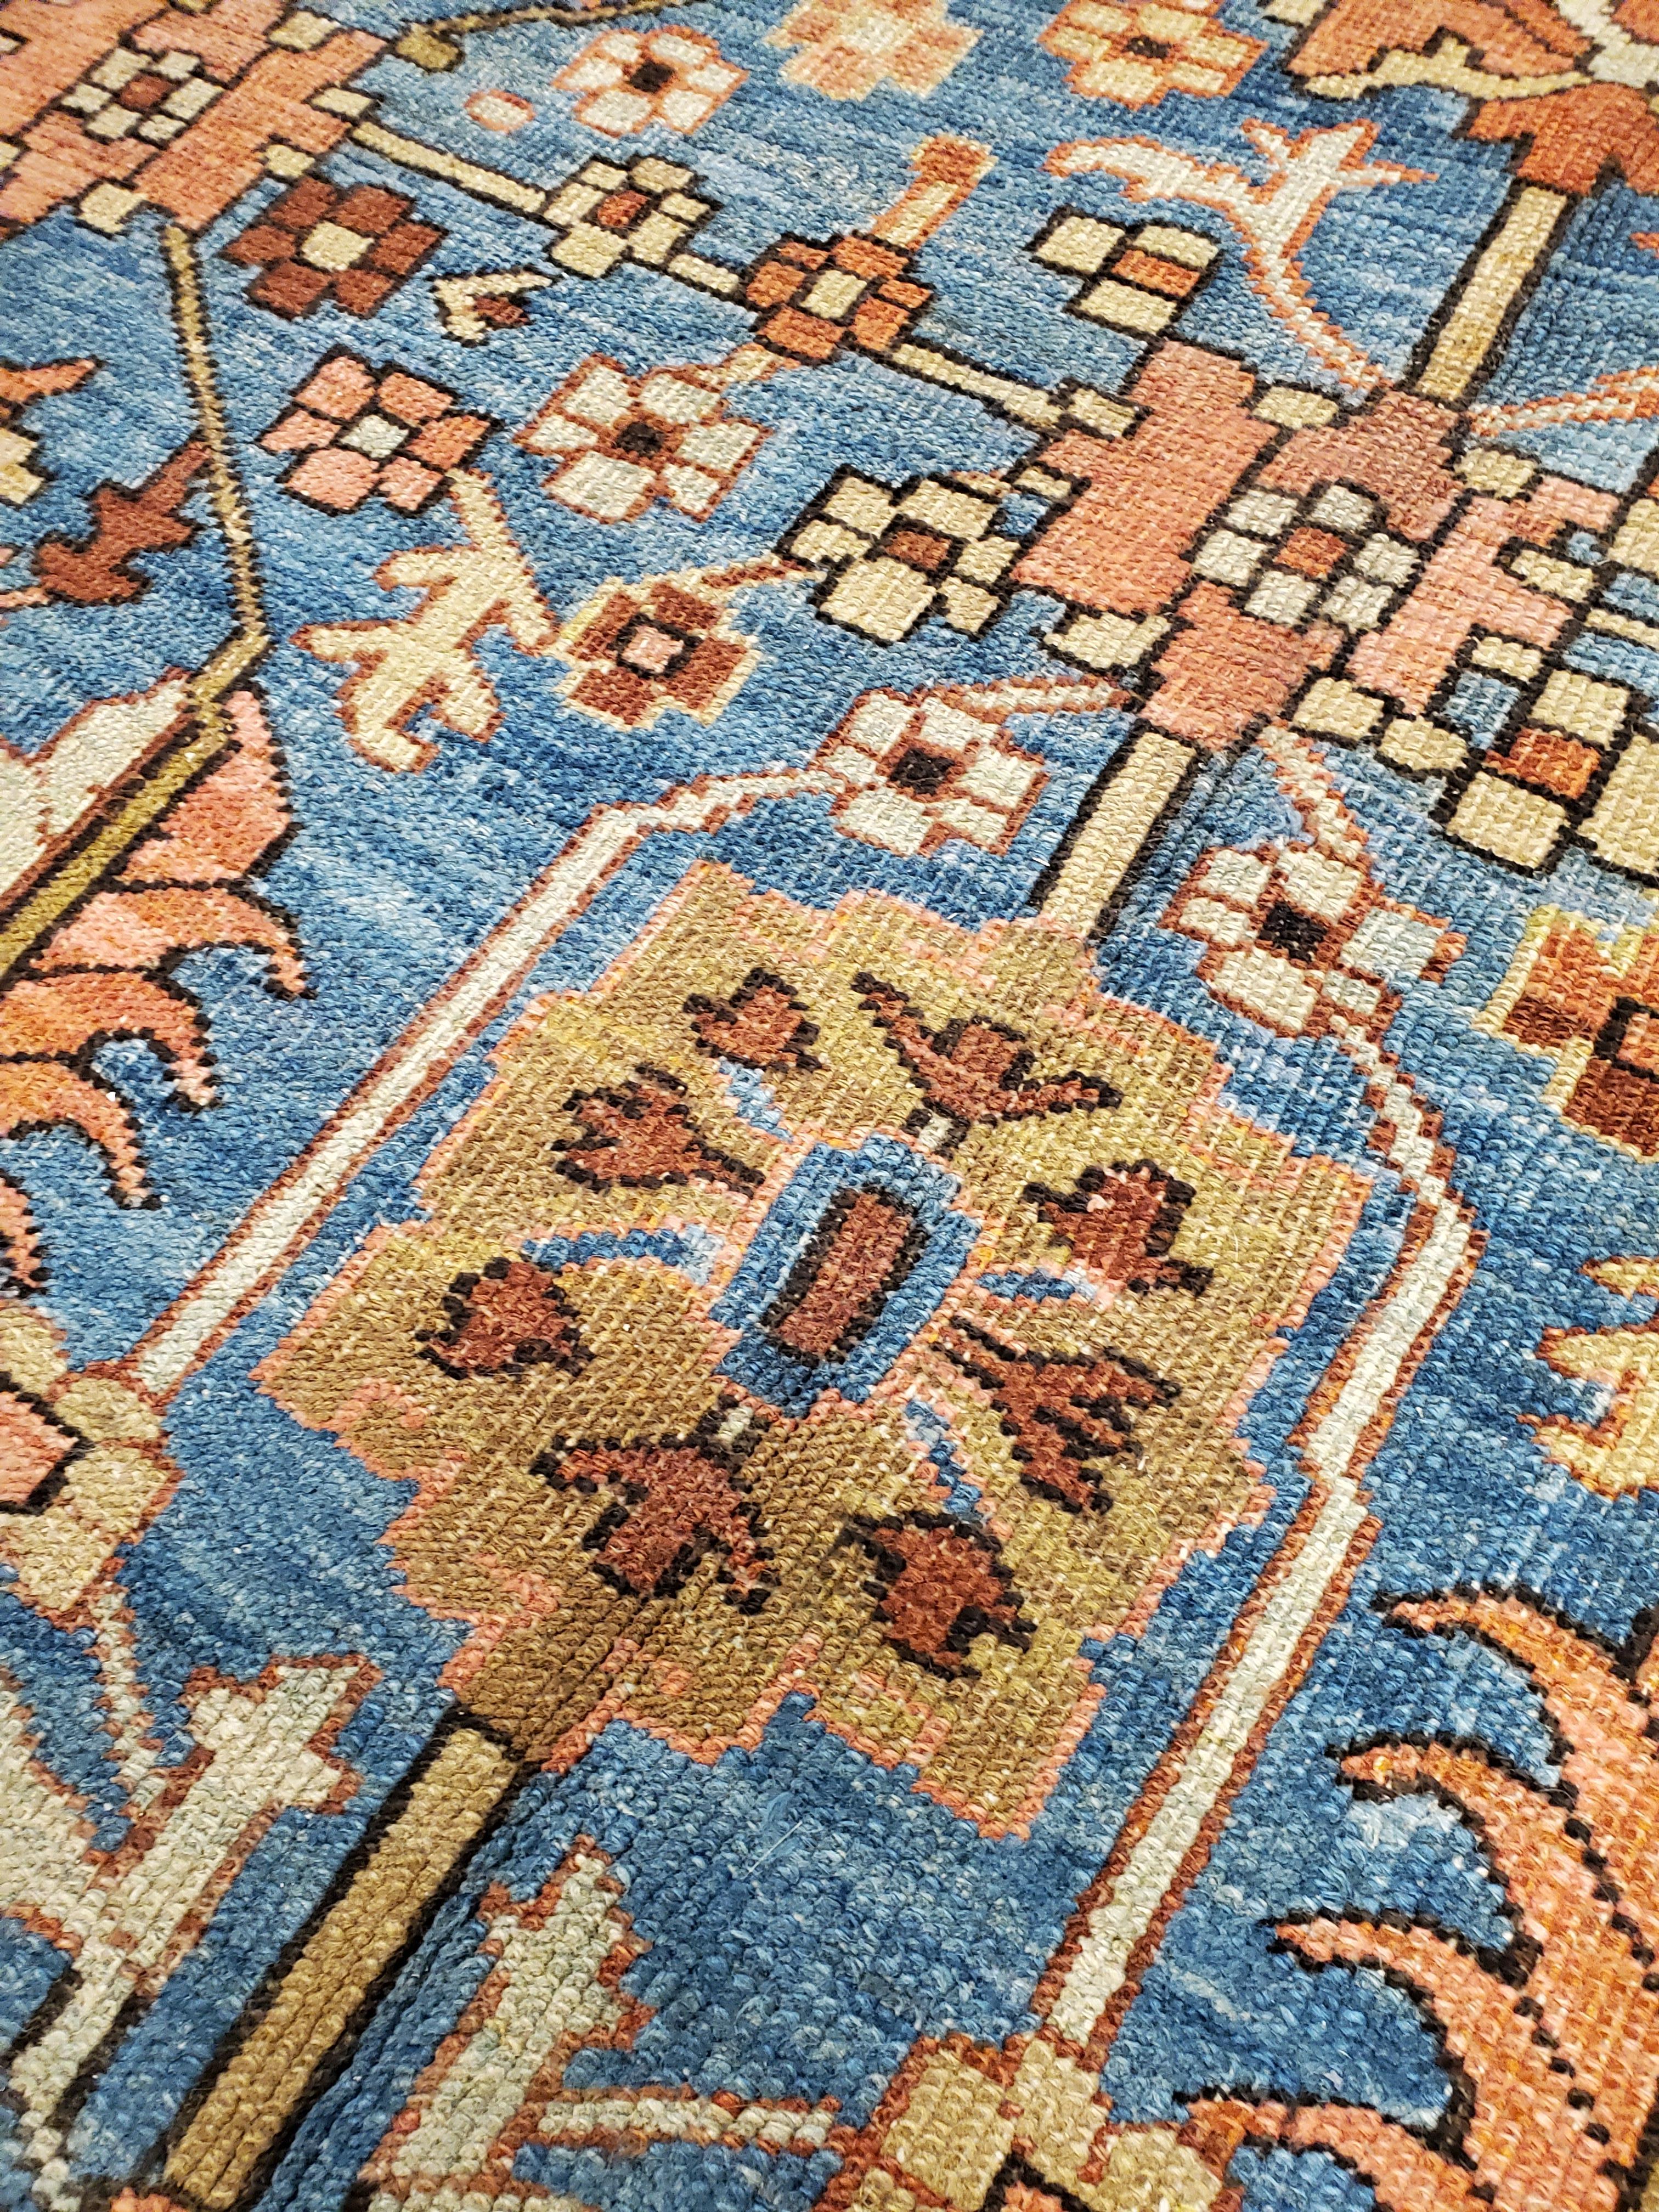 20th Century Antique Persian Serapi Carpet, Handmade Wool Oriental Rug, Rust and Light Blue